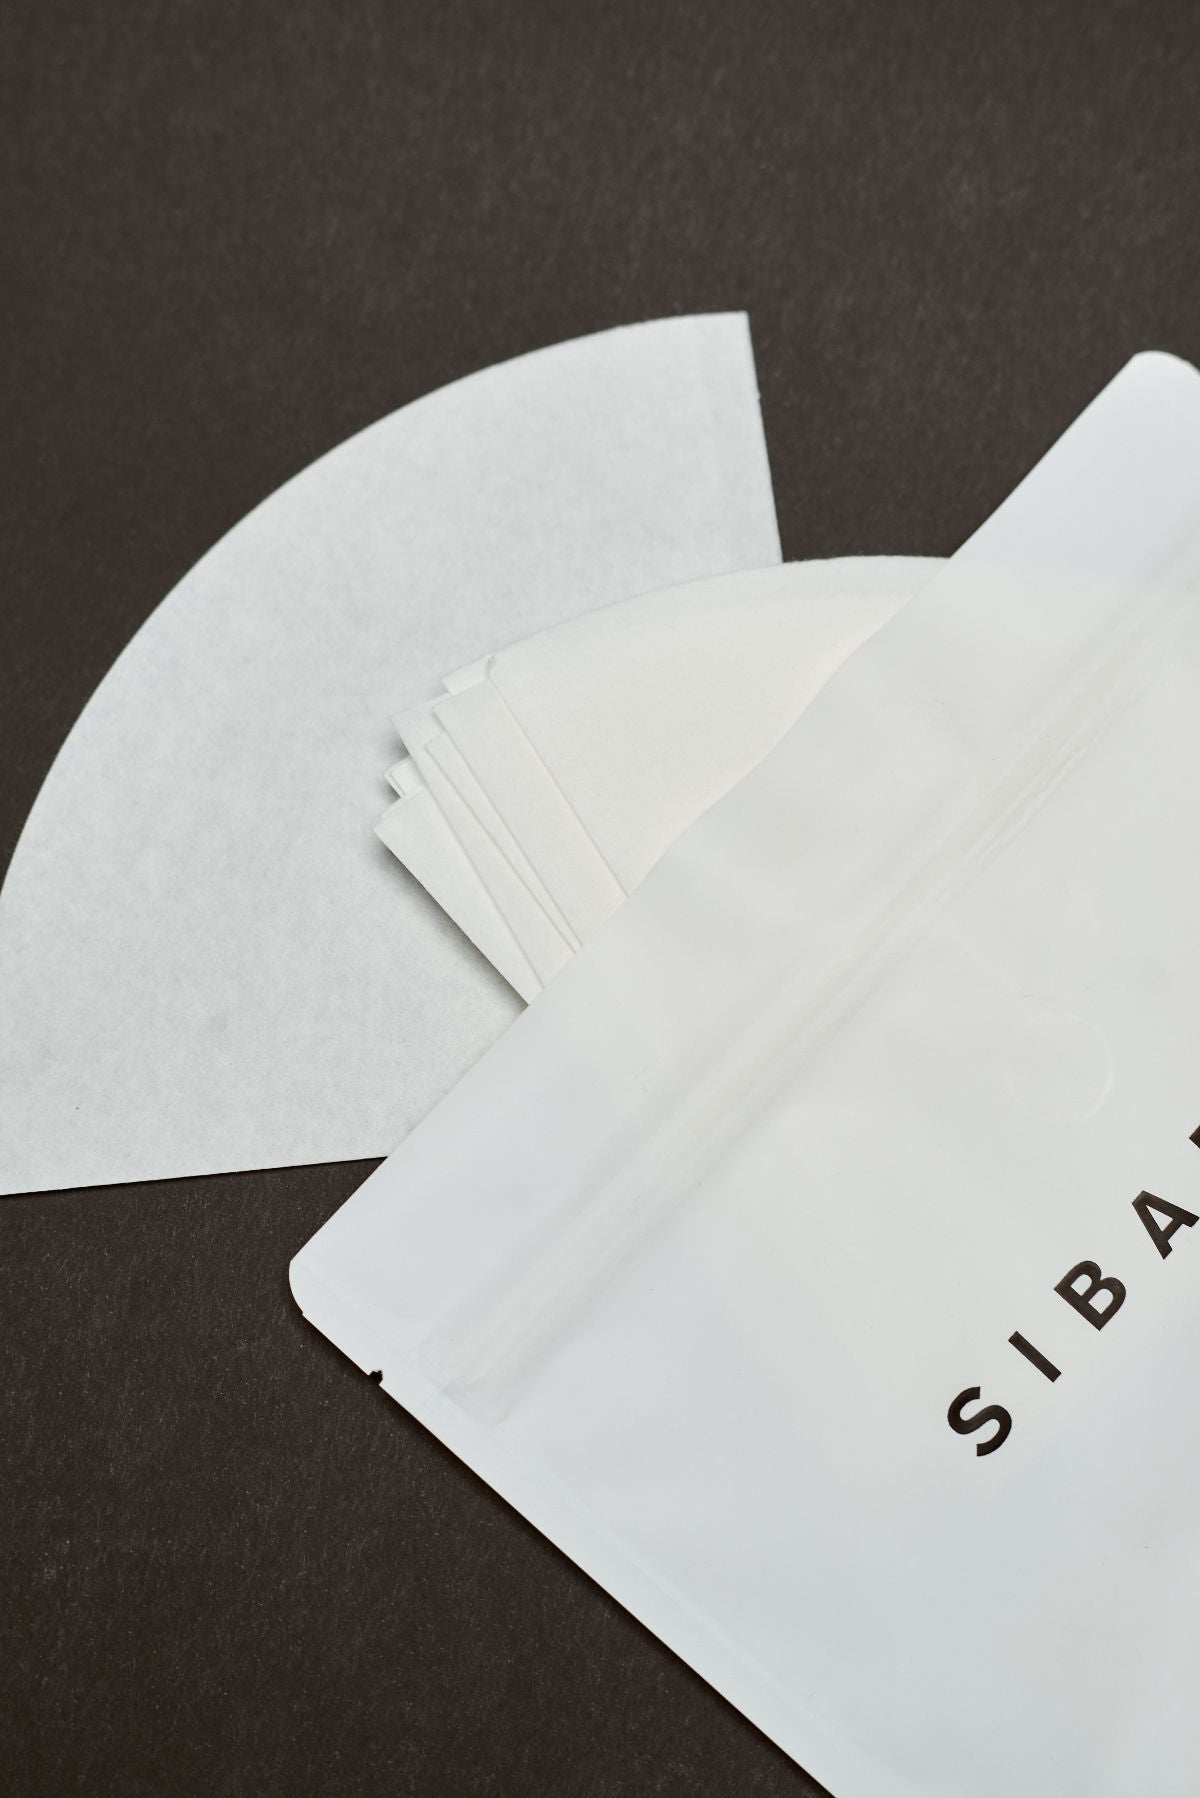 SIBARIST - CONE | FAST Paper Filter